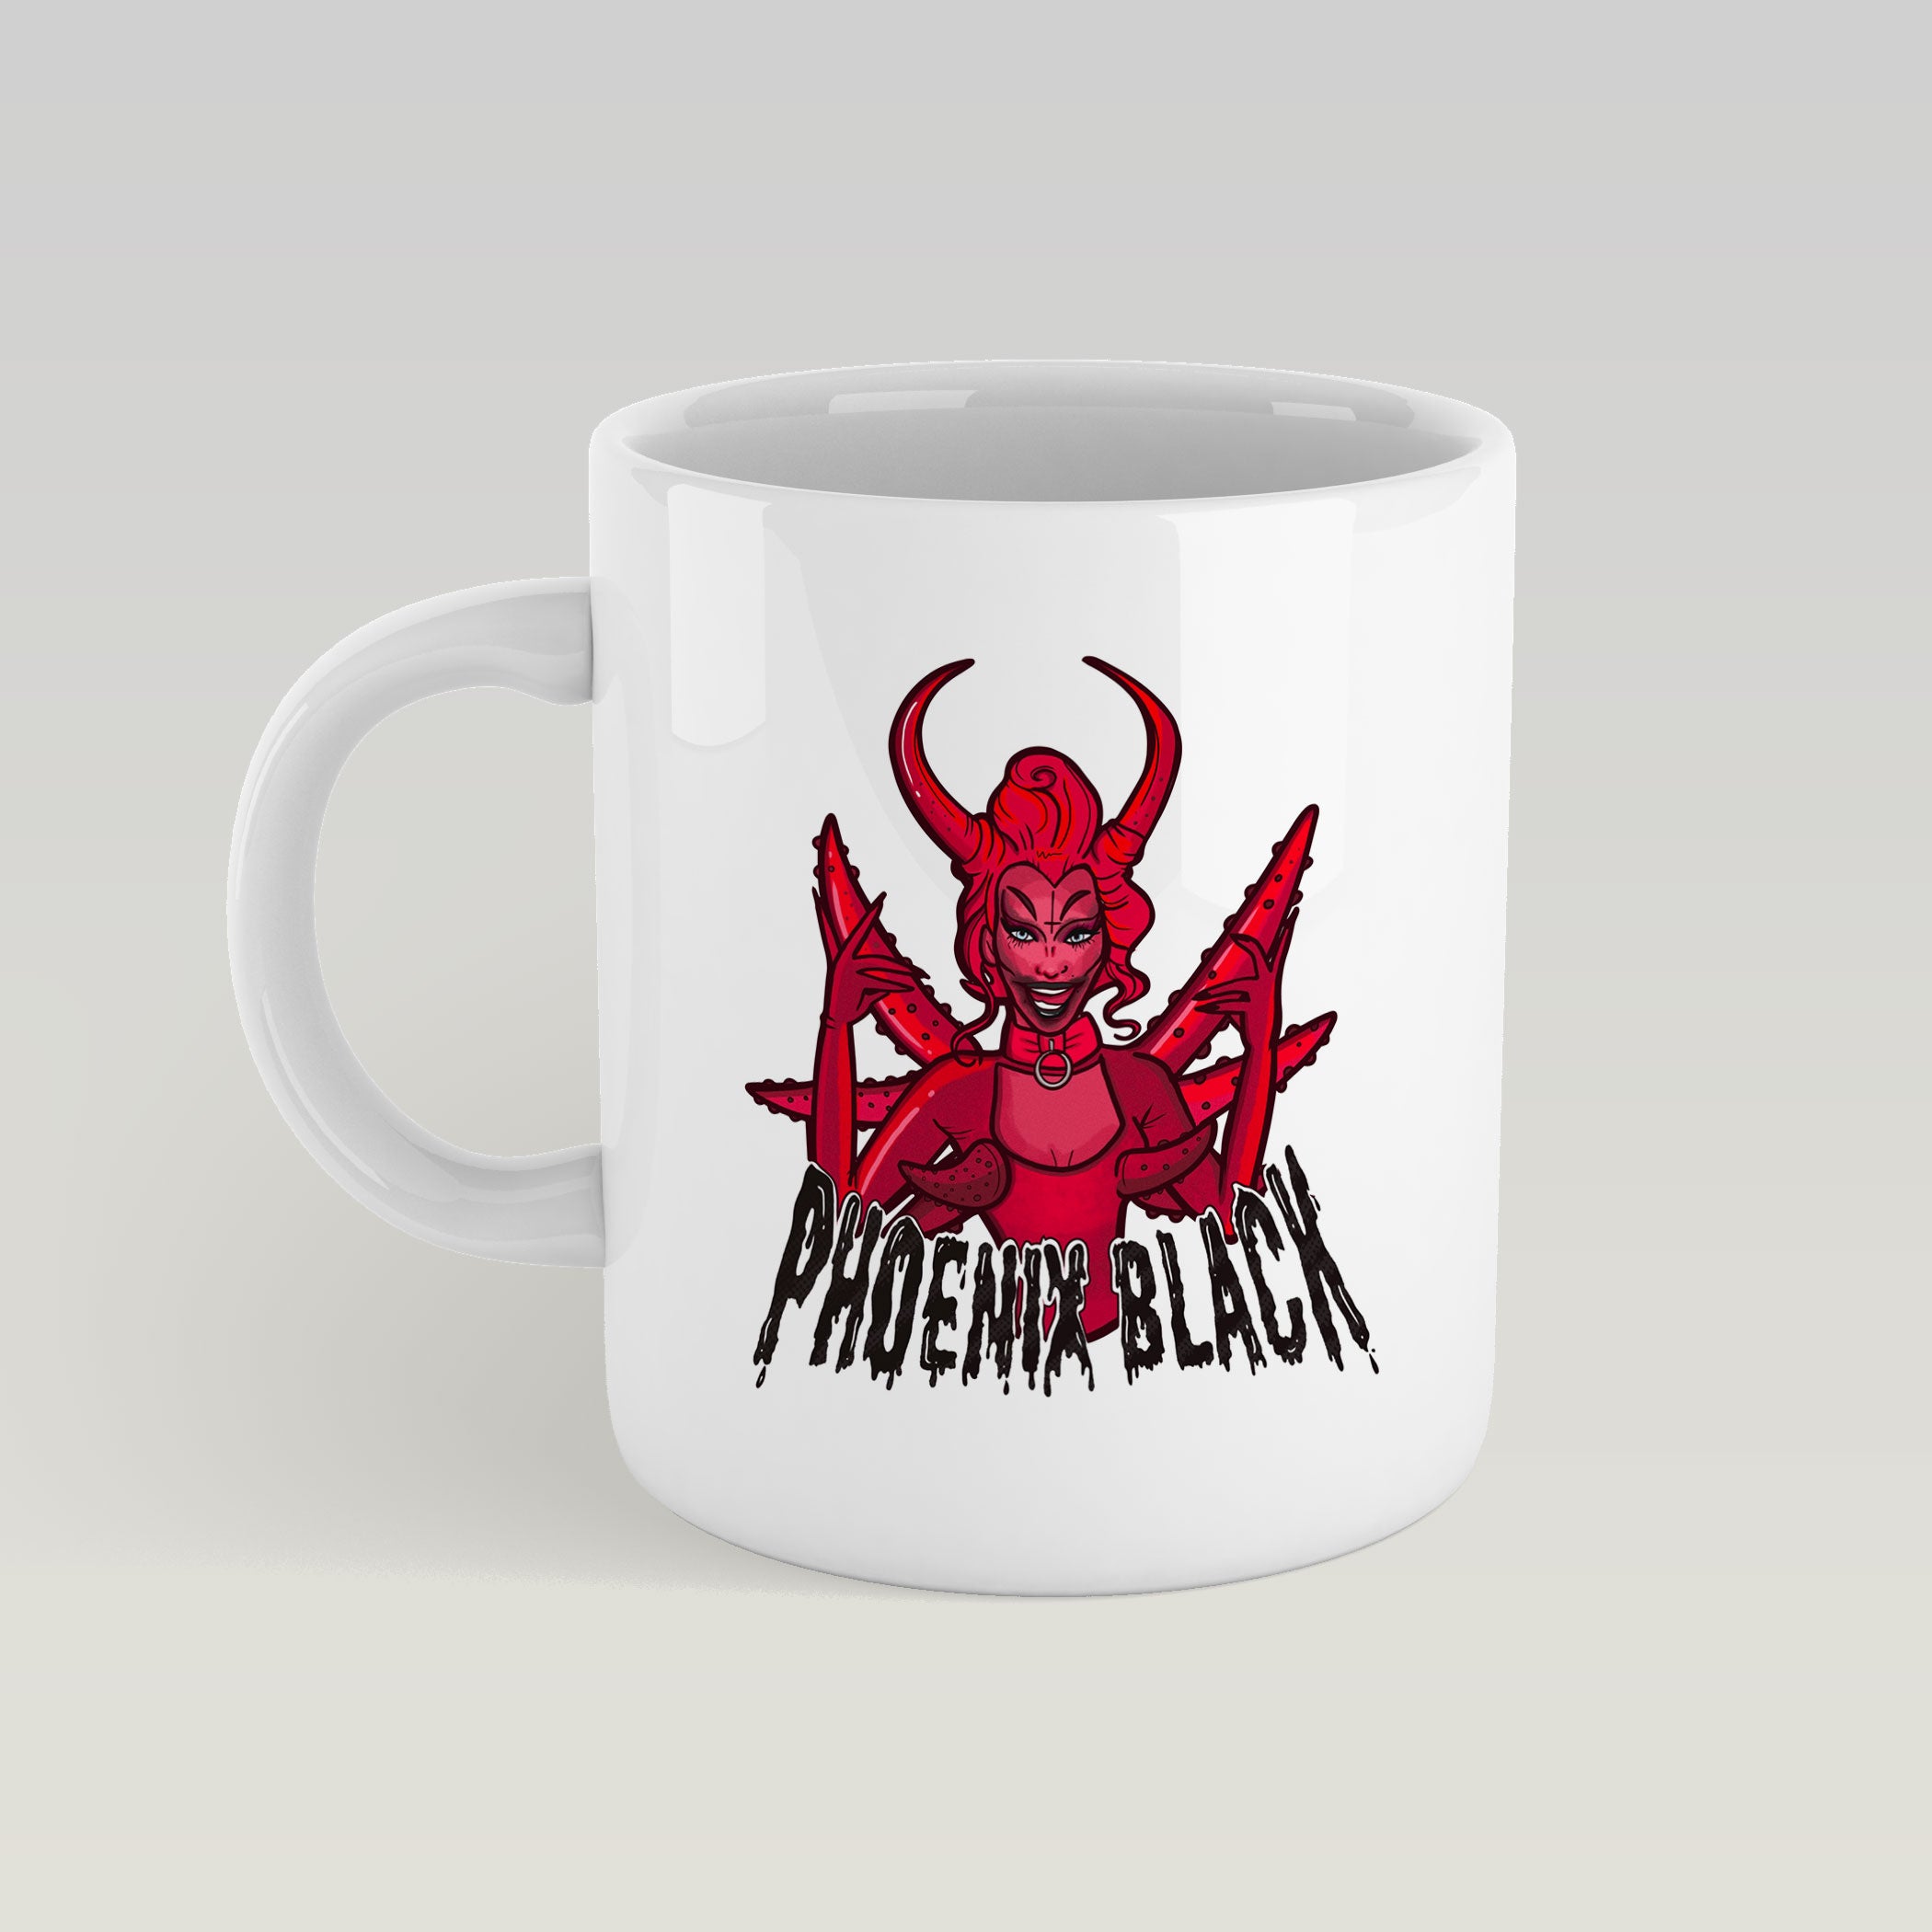 Phoenix Black - CMM Devil Mug